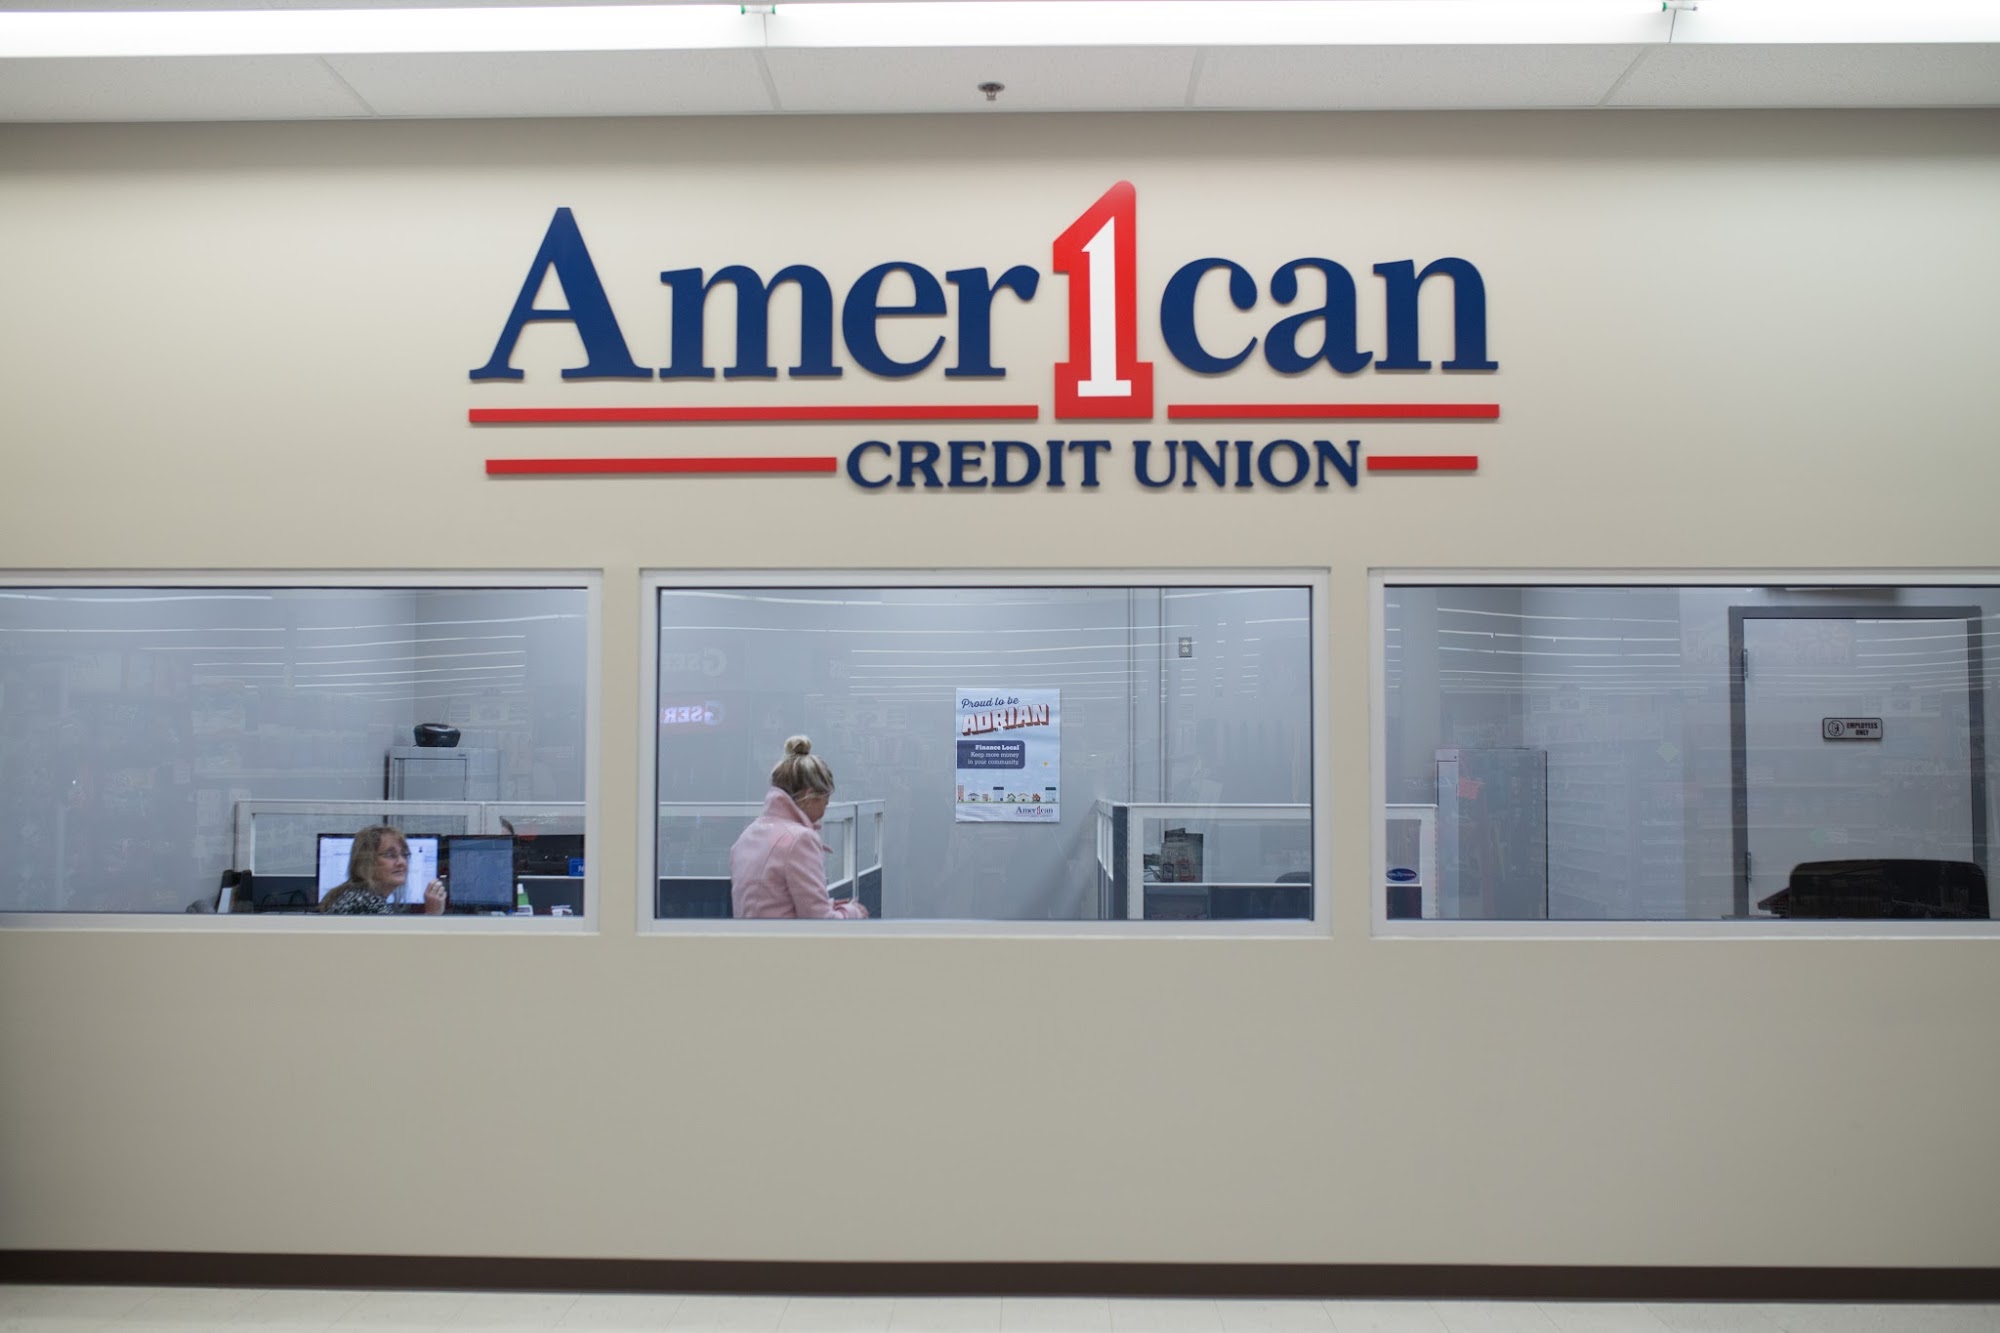 American 1 Credit Union